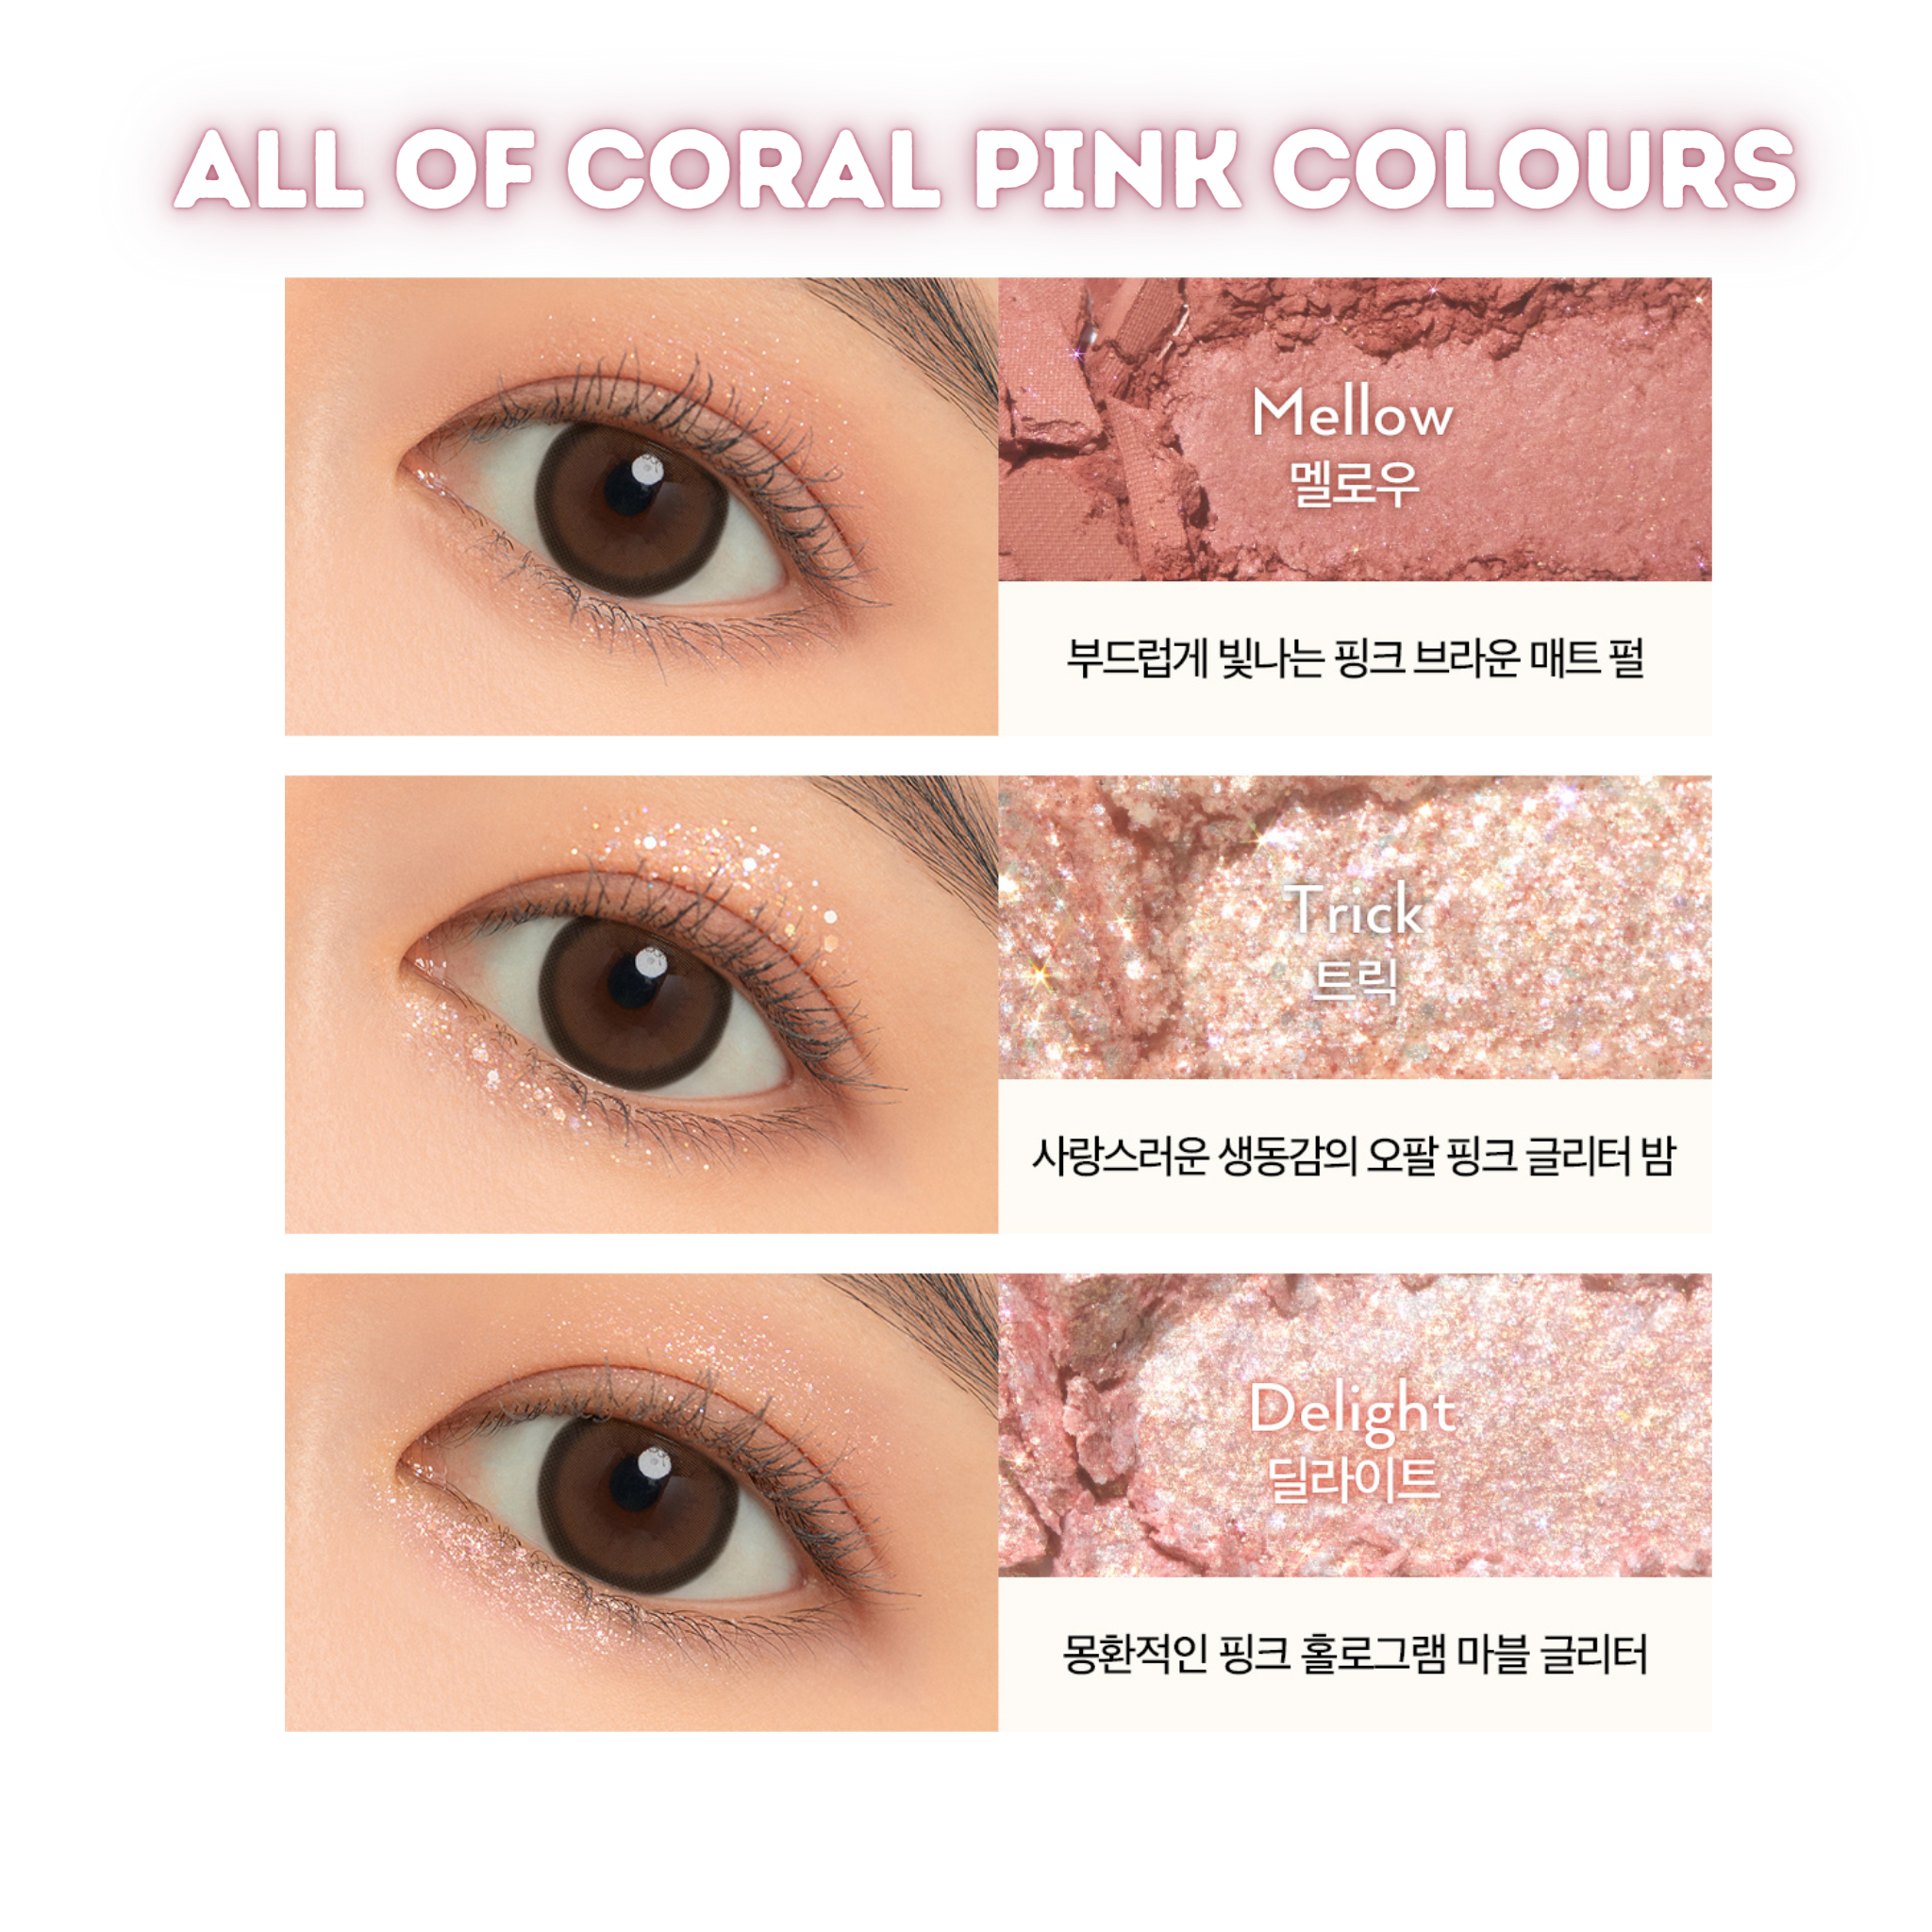 UNLEASHIA Glitterpedia Eye Palette - N°3 All of Coral Pink colours